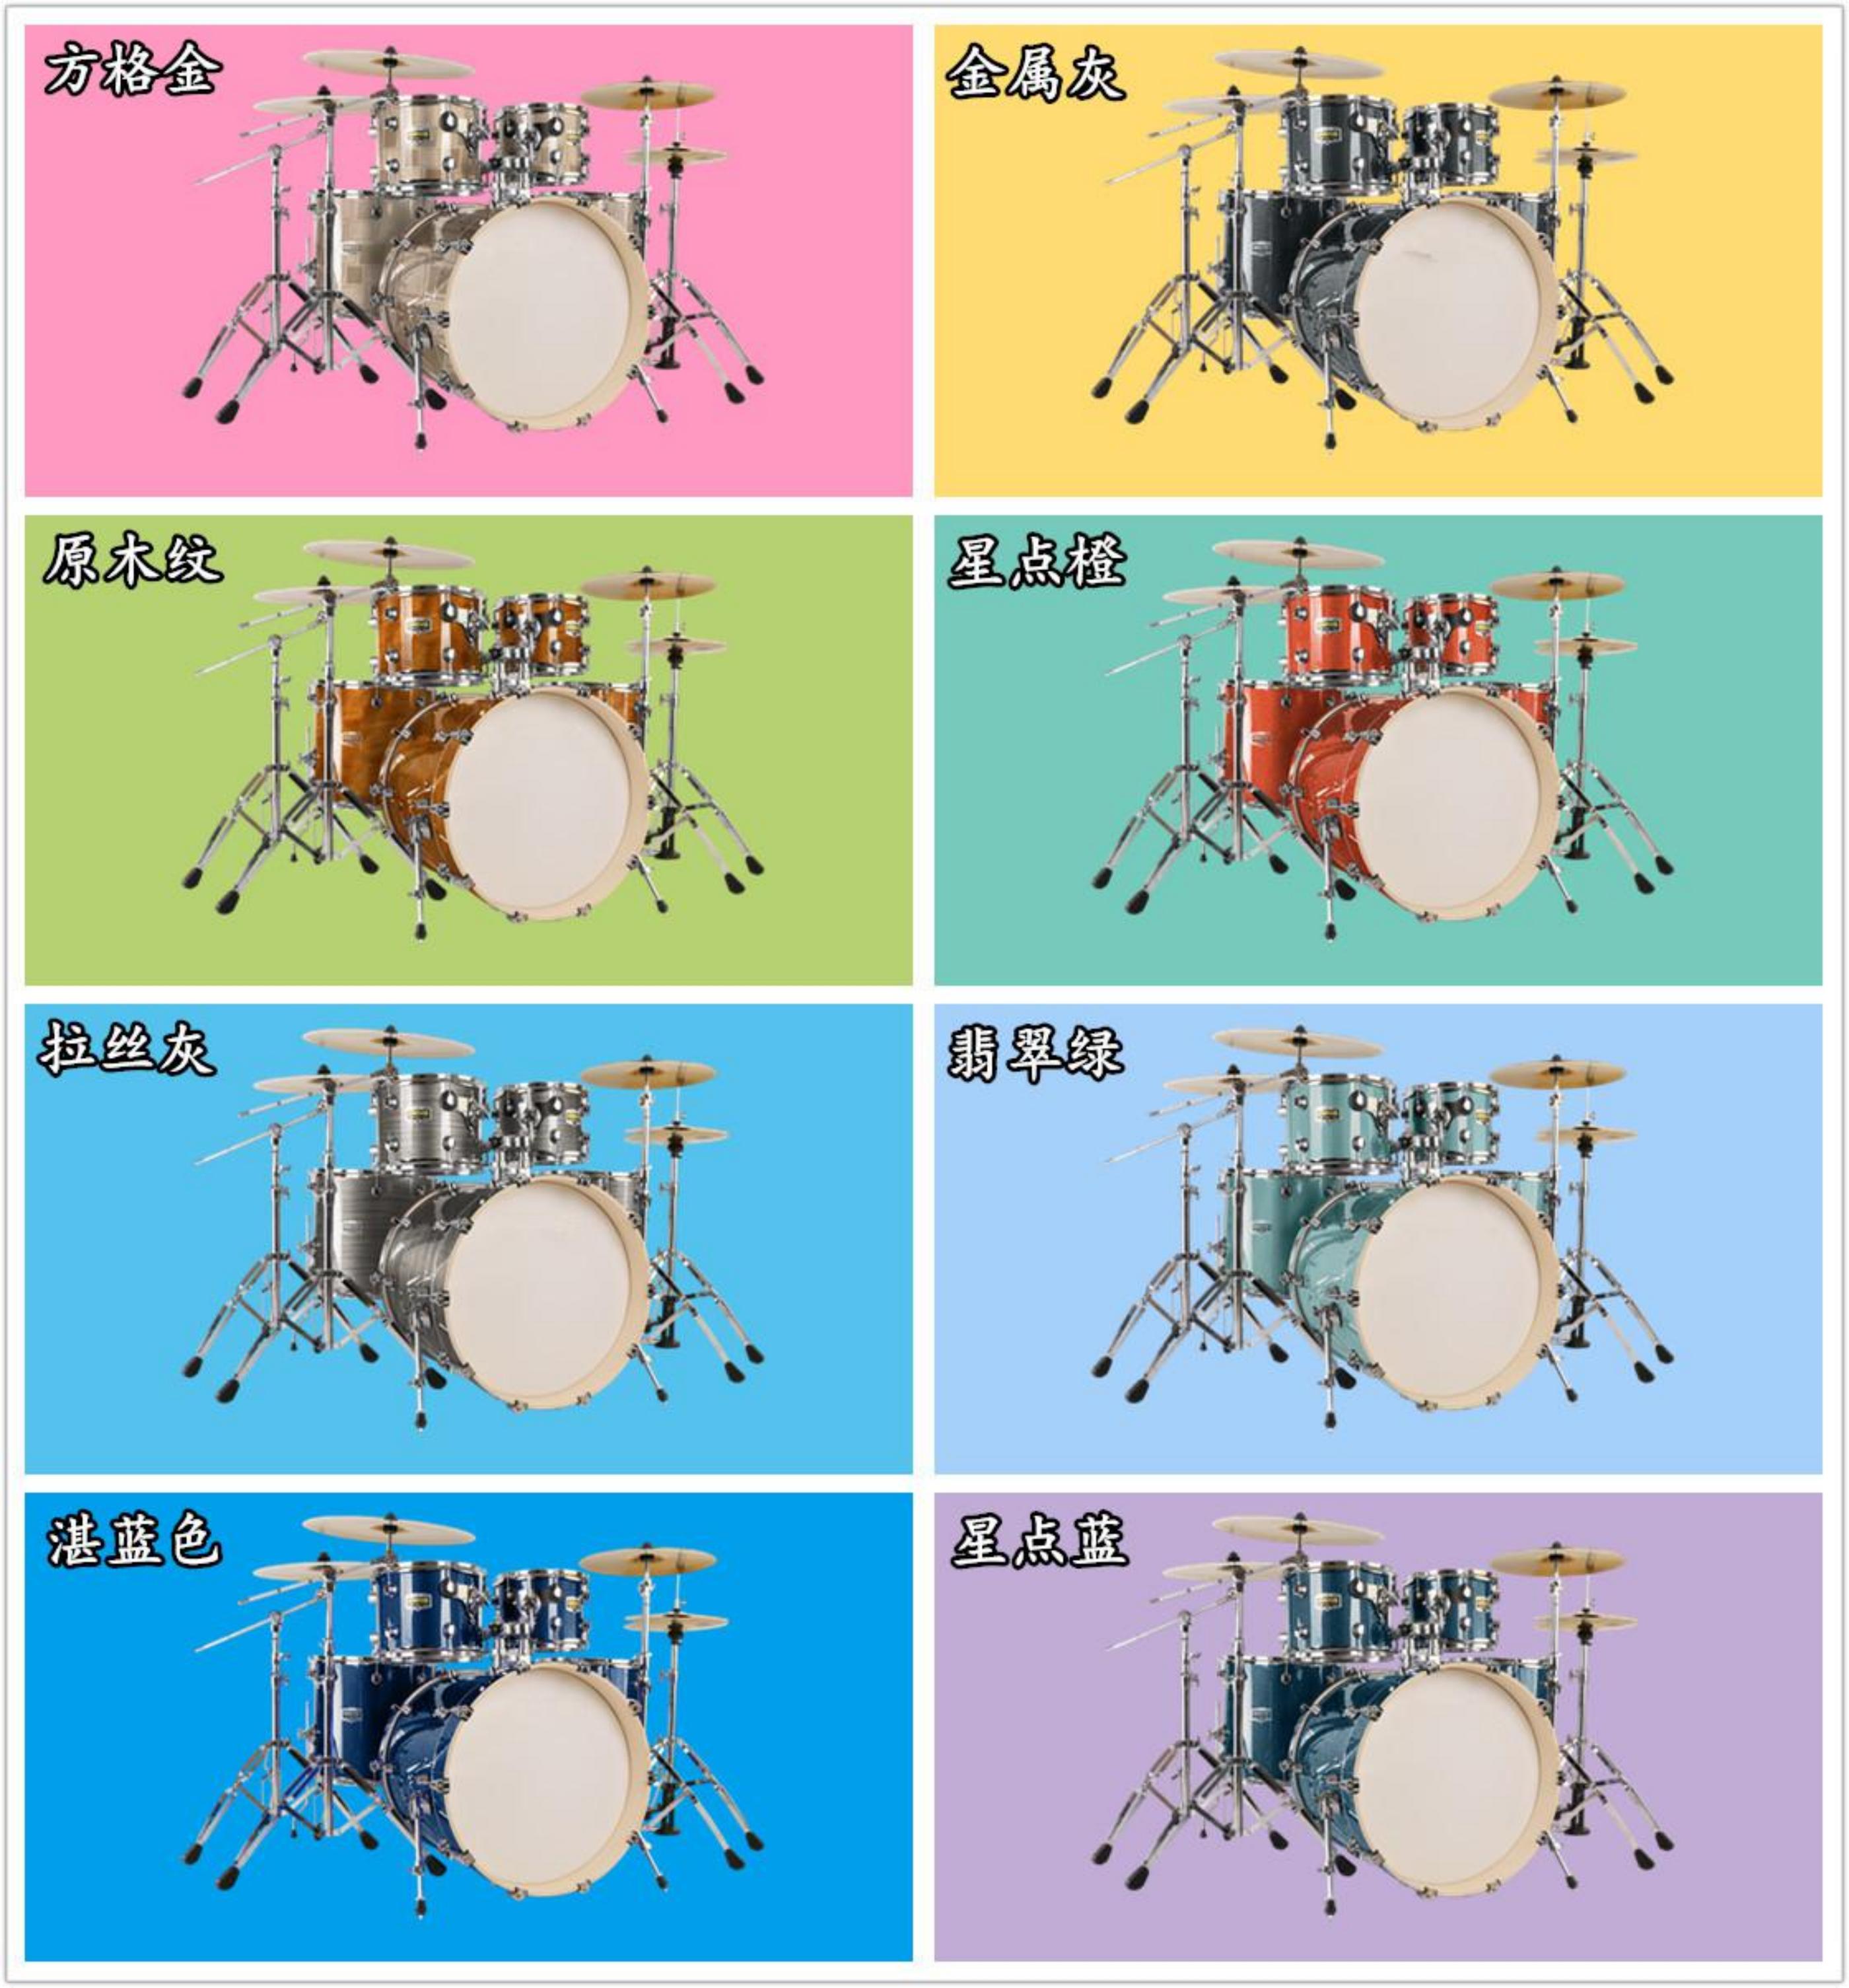 Smiger Drum Set 22 Inch for Adults 5 Piece Junior Beginner Kit